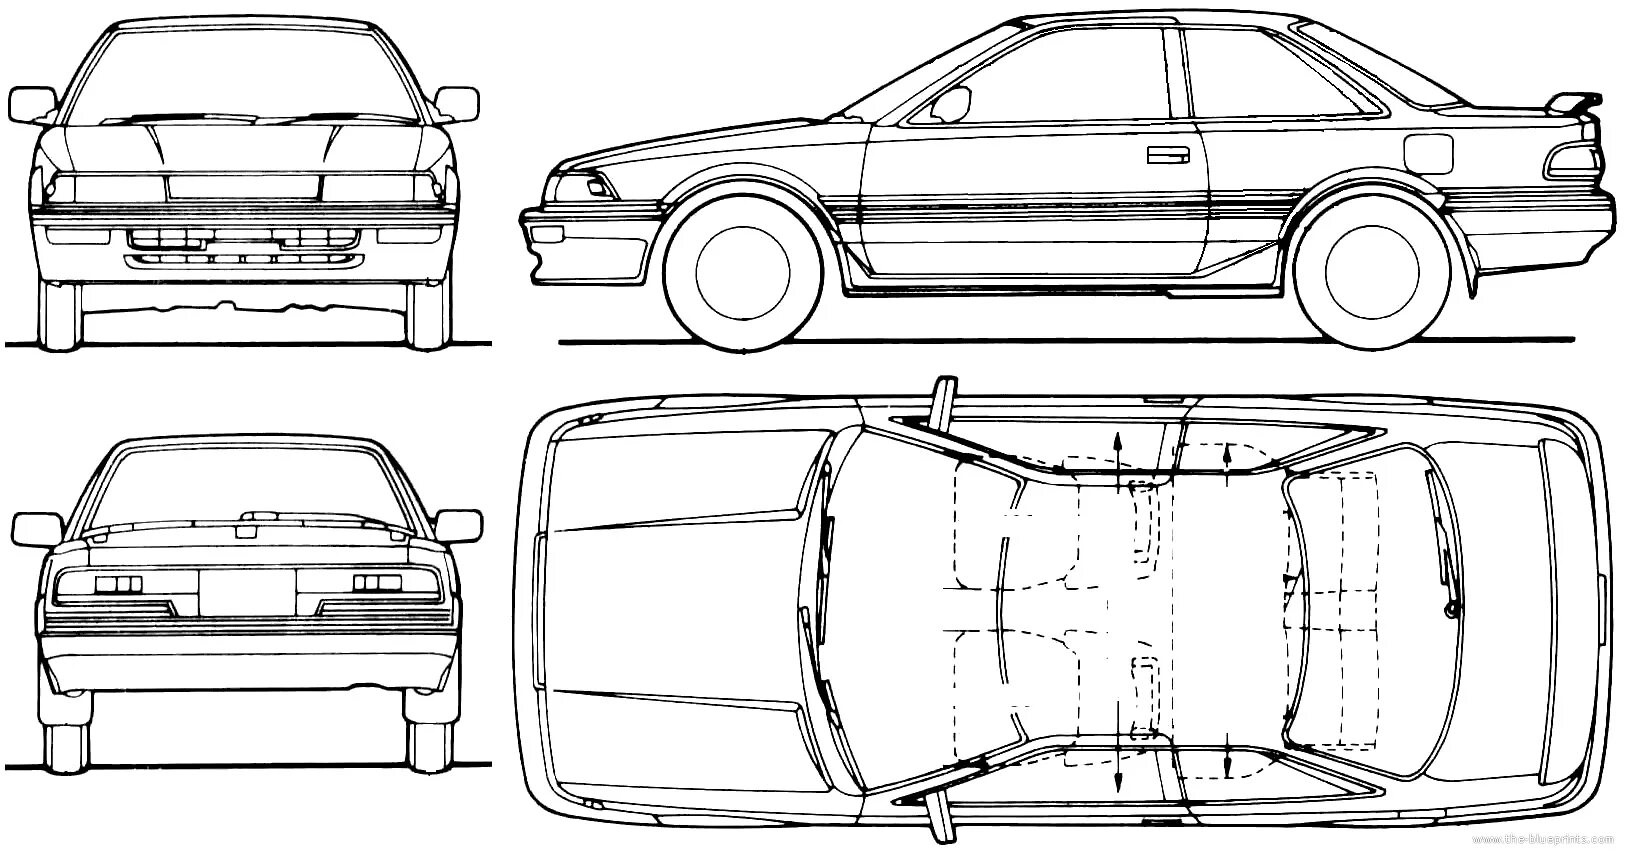 Toyota Corolla ae86 чертеж. Toyota Corolla ae86 Blueprint. Toyota ae86 Blueprint. Чертеж Toyota Corolla ae86 Levin.